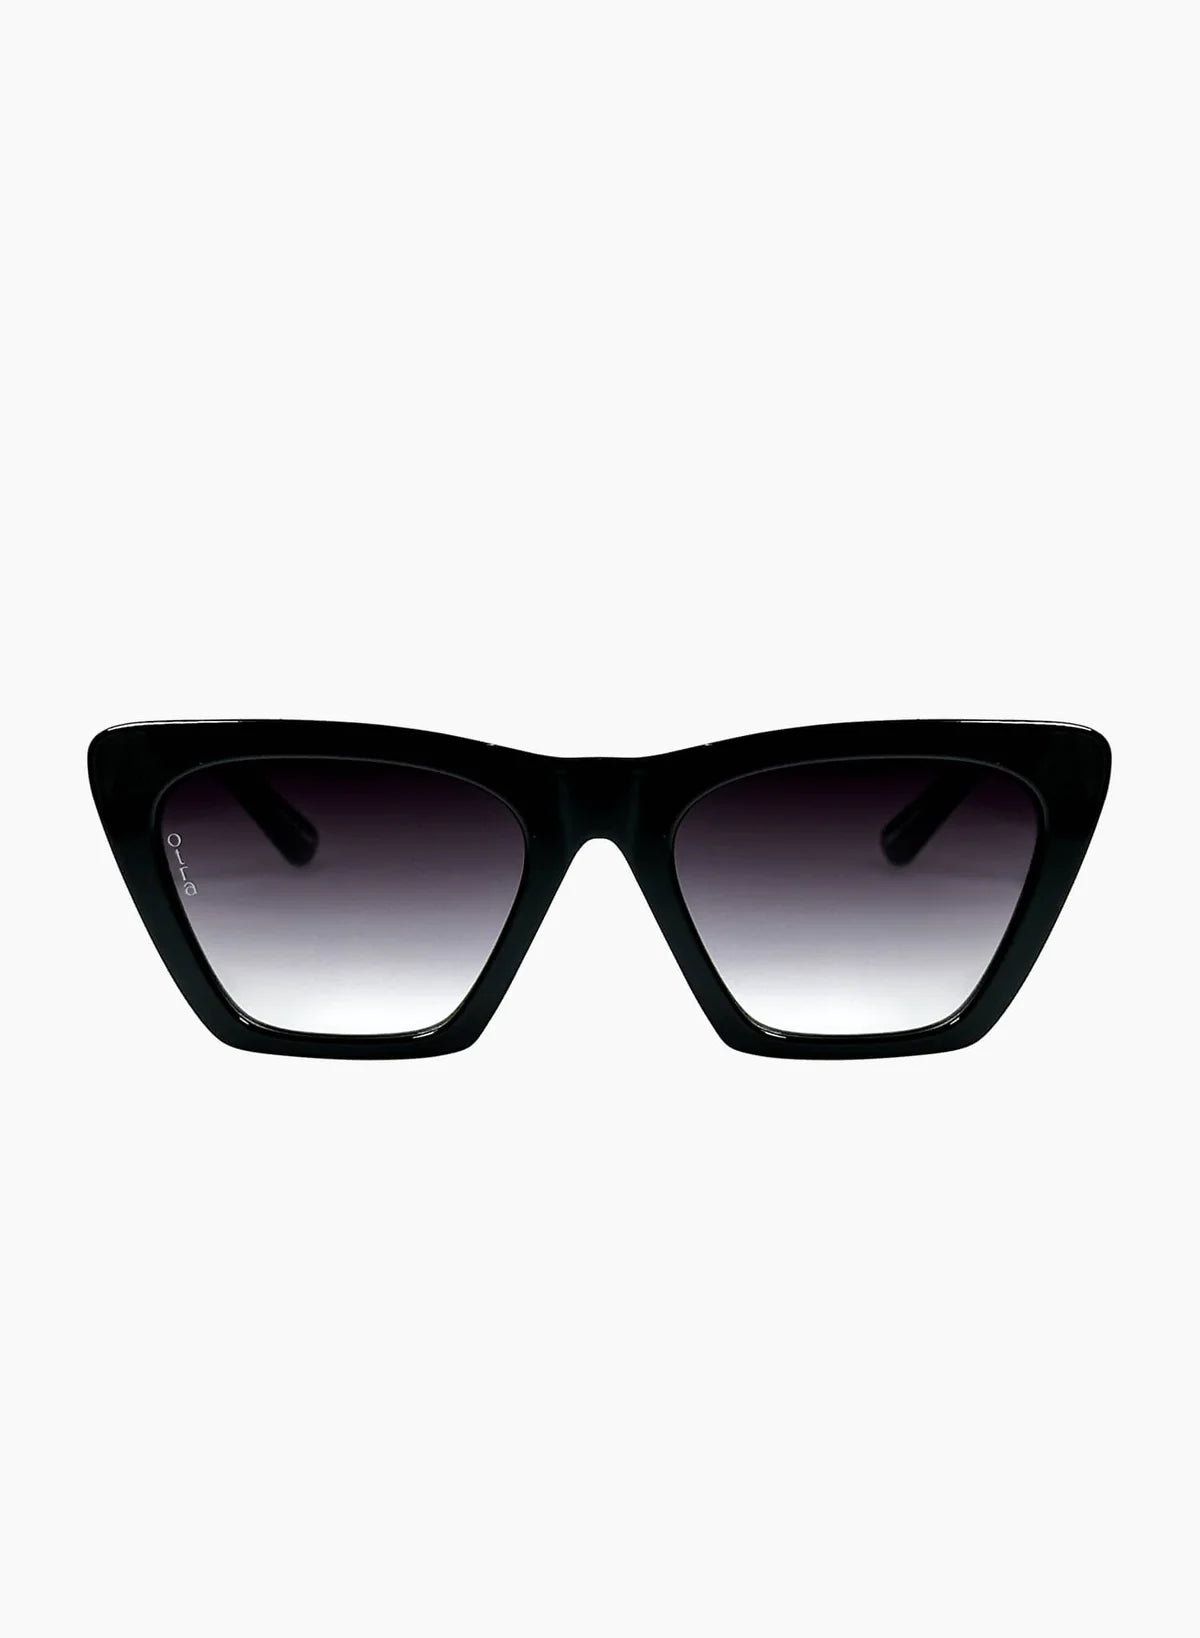 Step Ahead Sunglasses Black Smoke Fade, Sunglass Acc by Otra | LIT Boutique